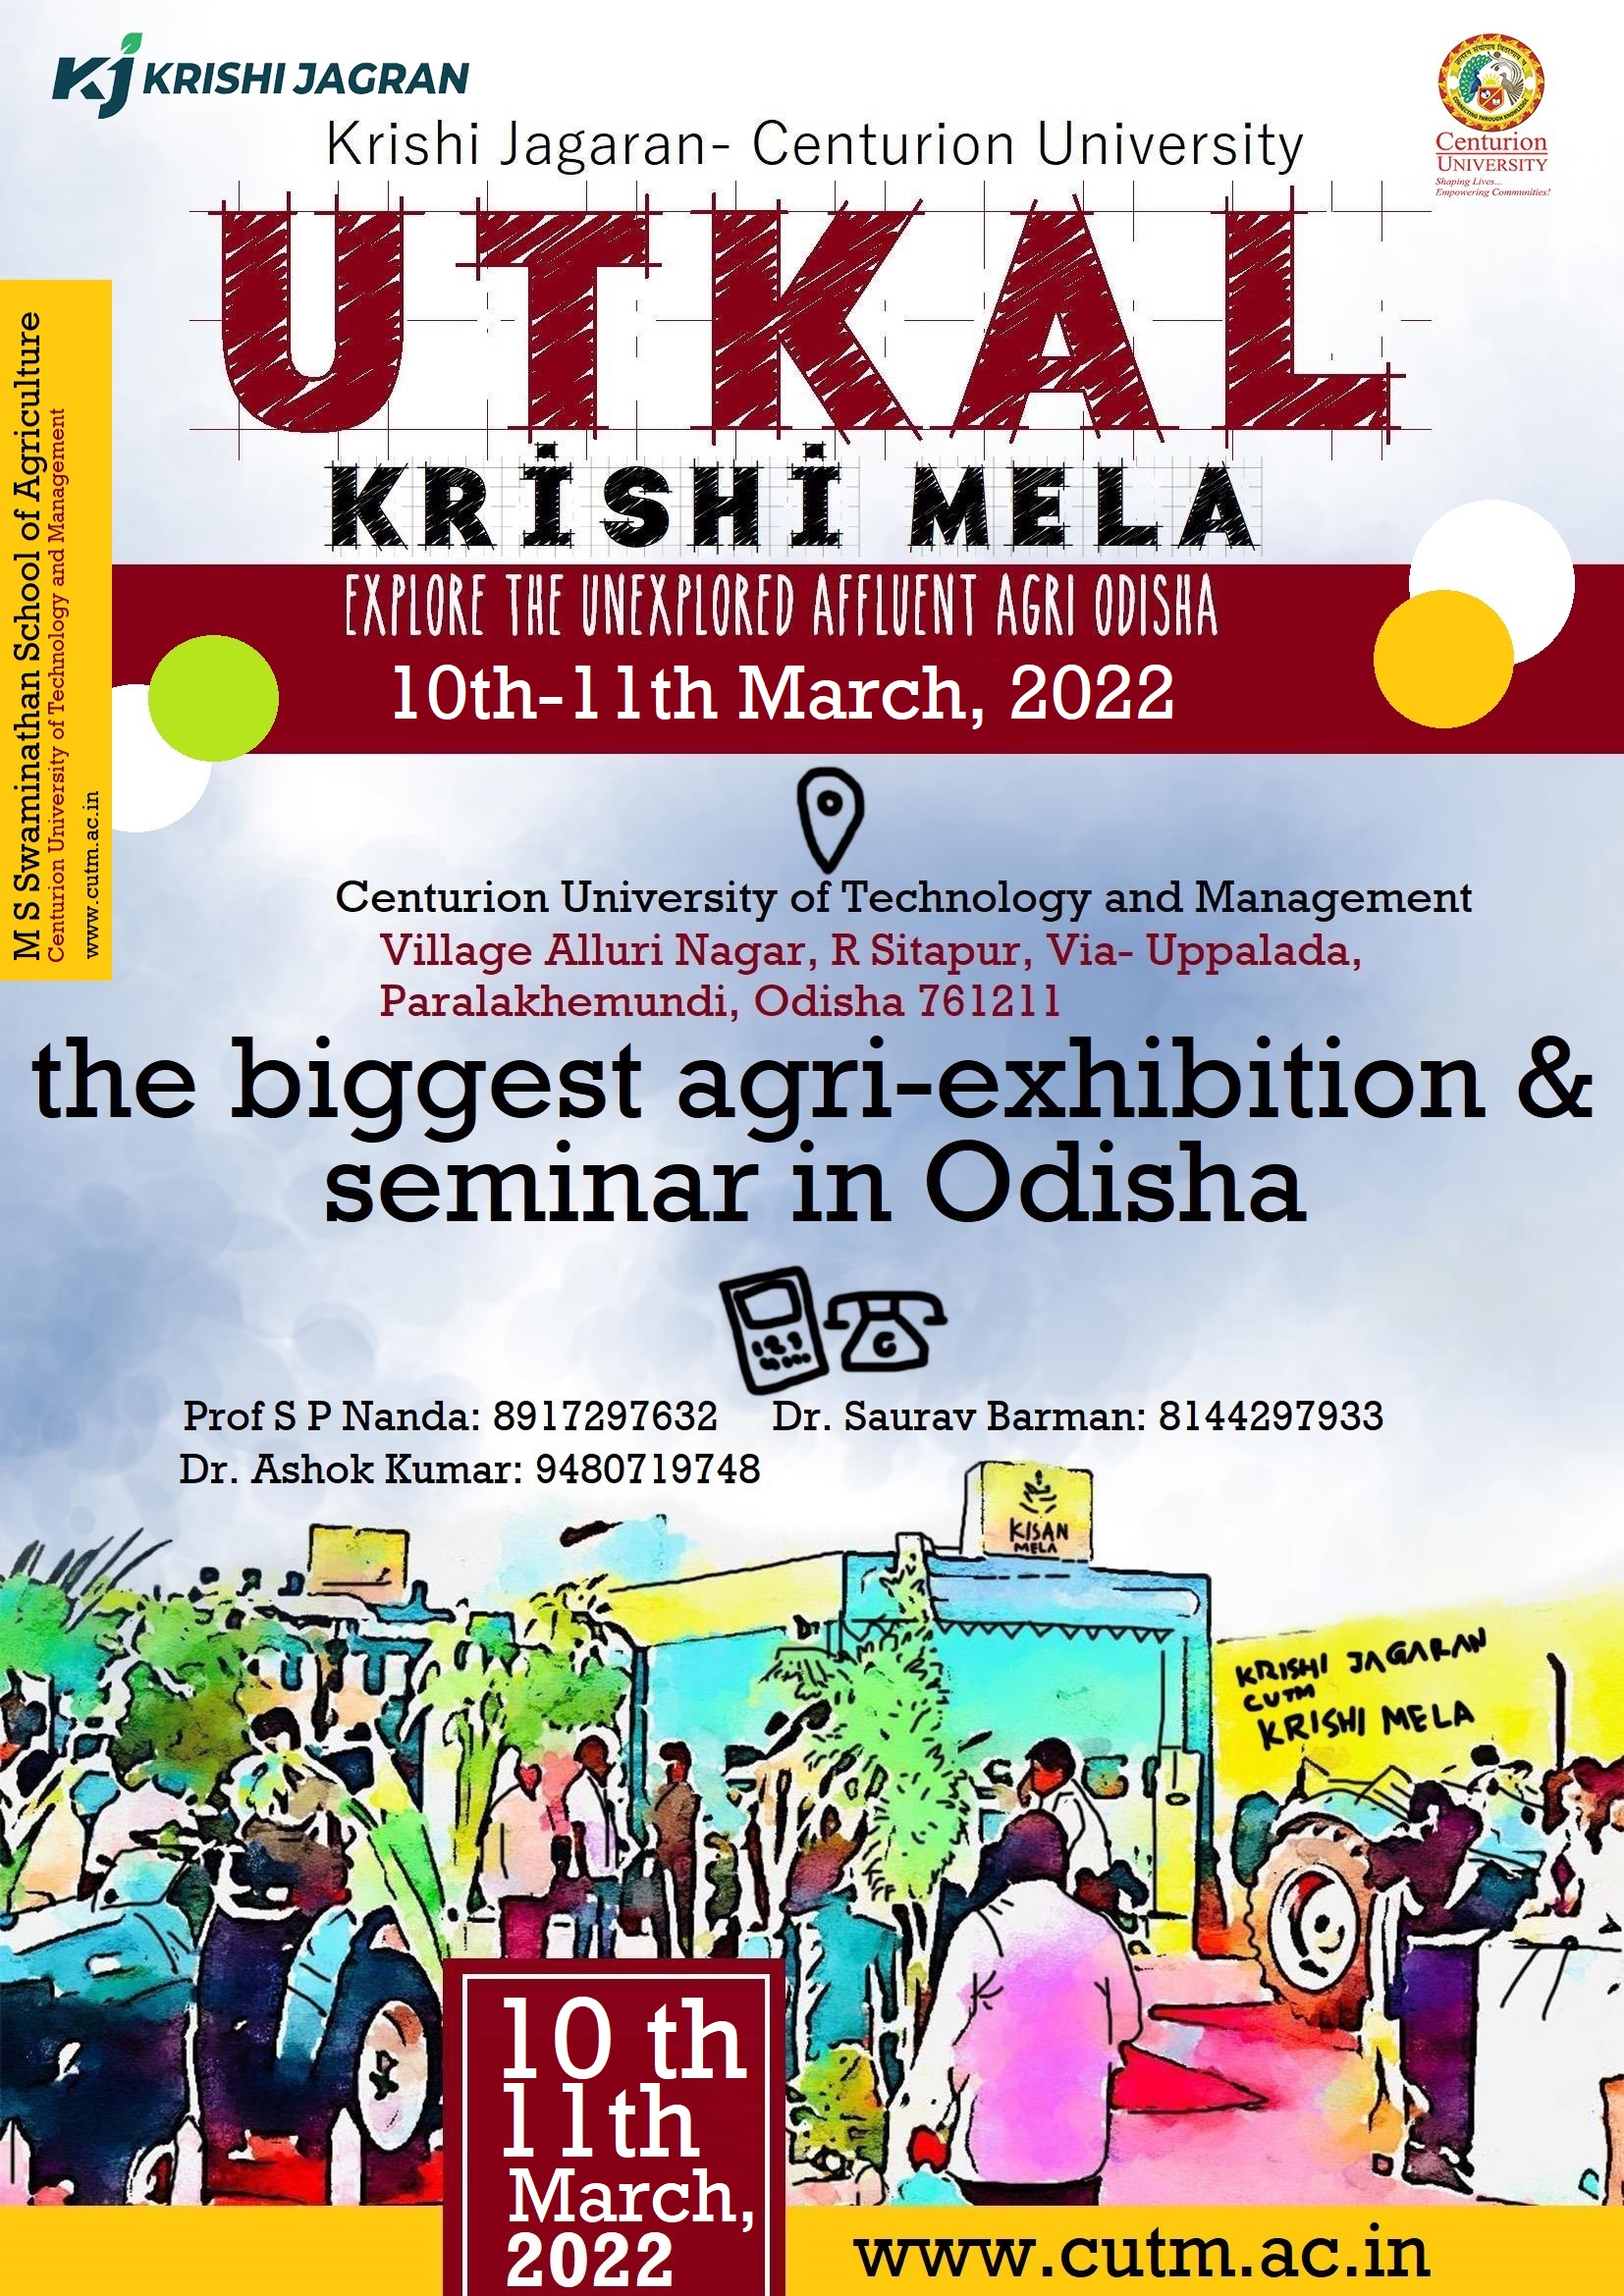 Agri-exhibition and seminar in Odisha